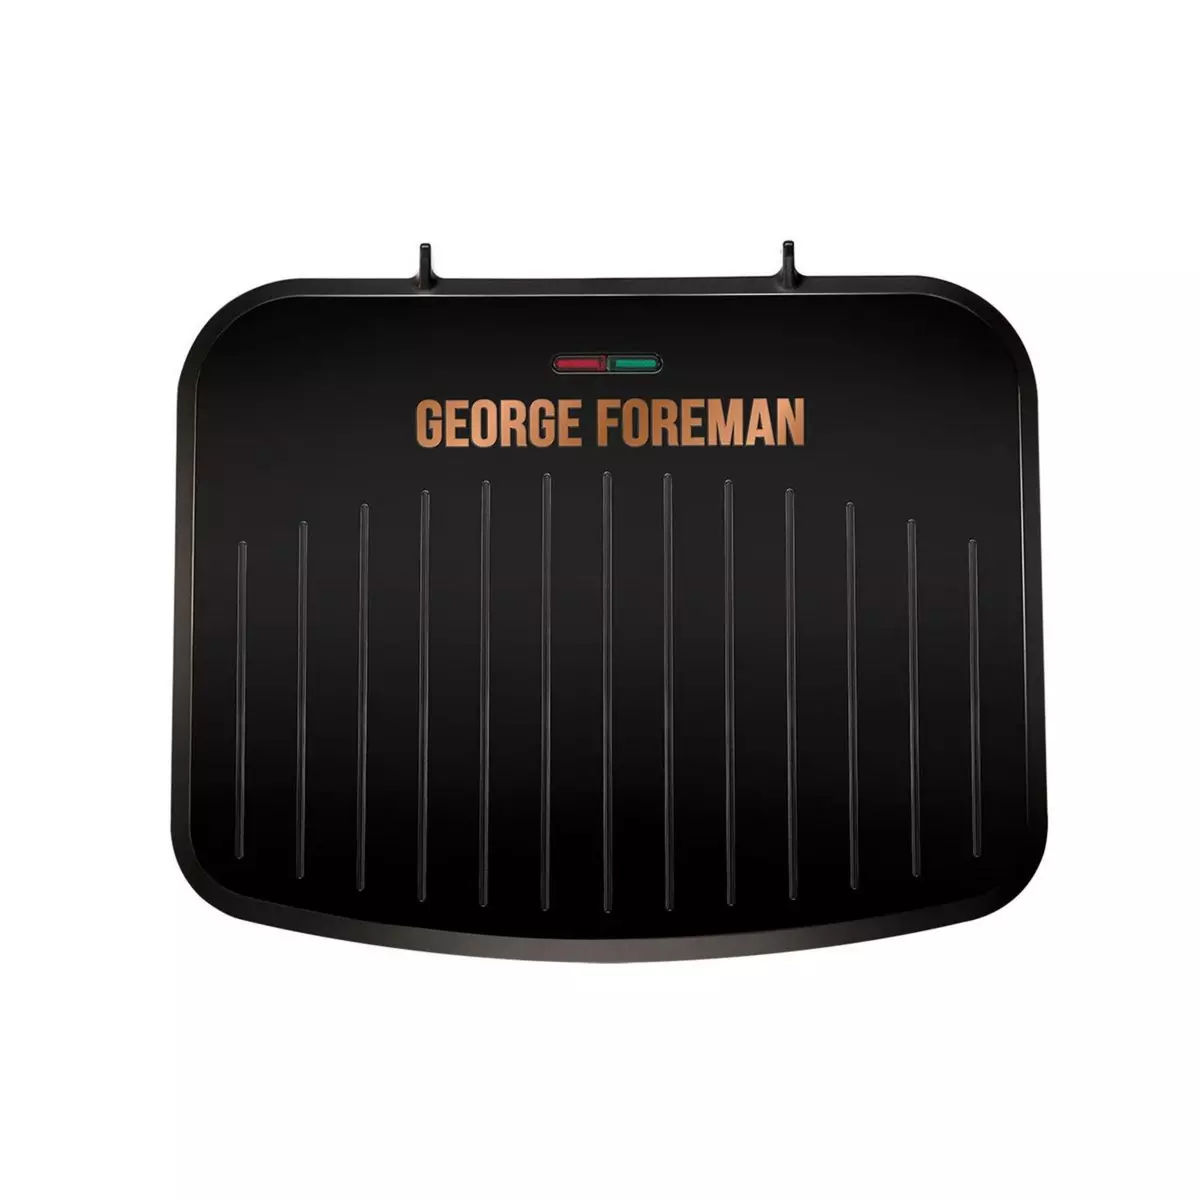 GEORGE FOREMAN Grill viande 25811-56 - Noir